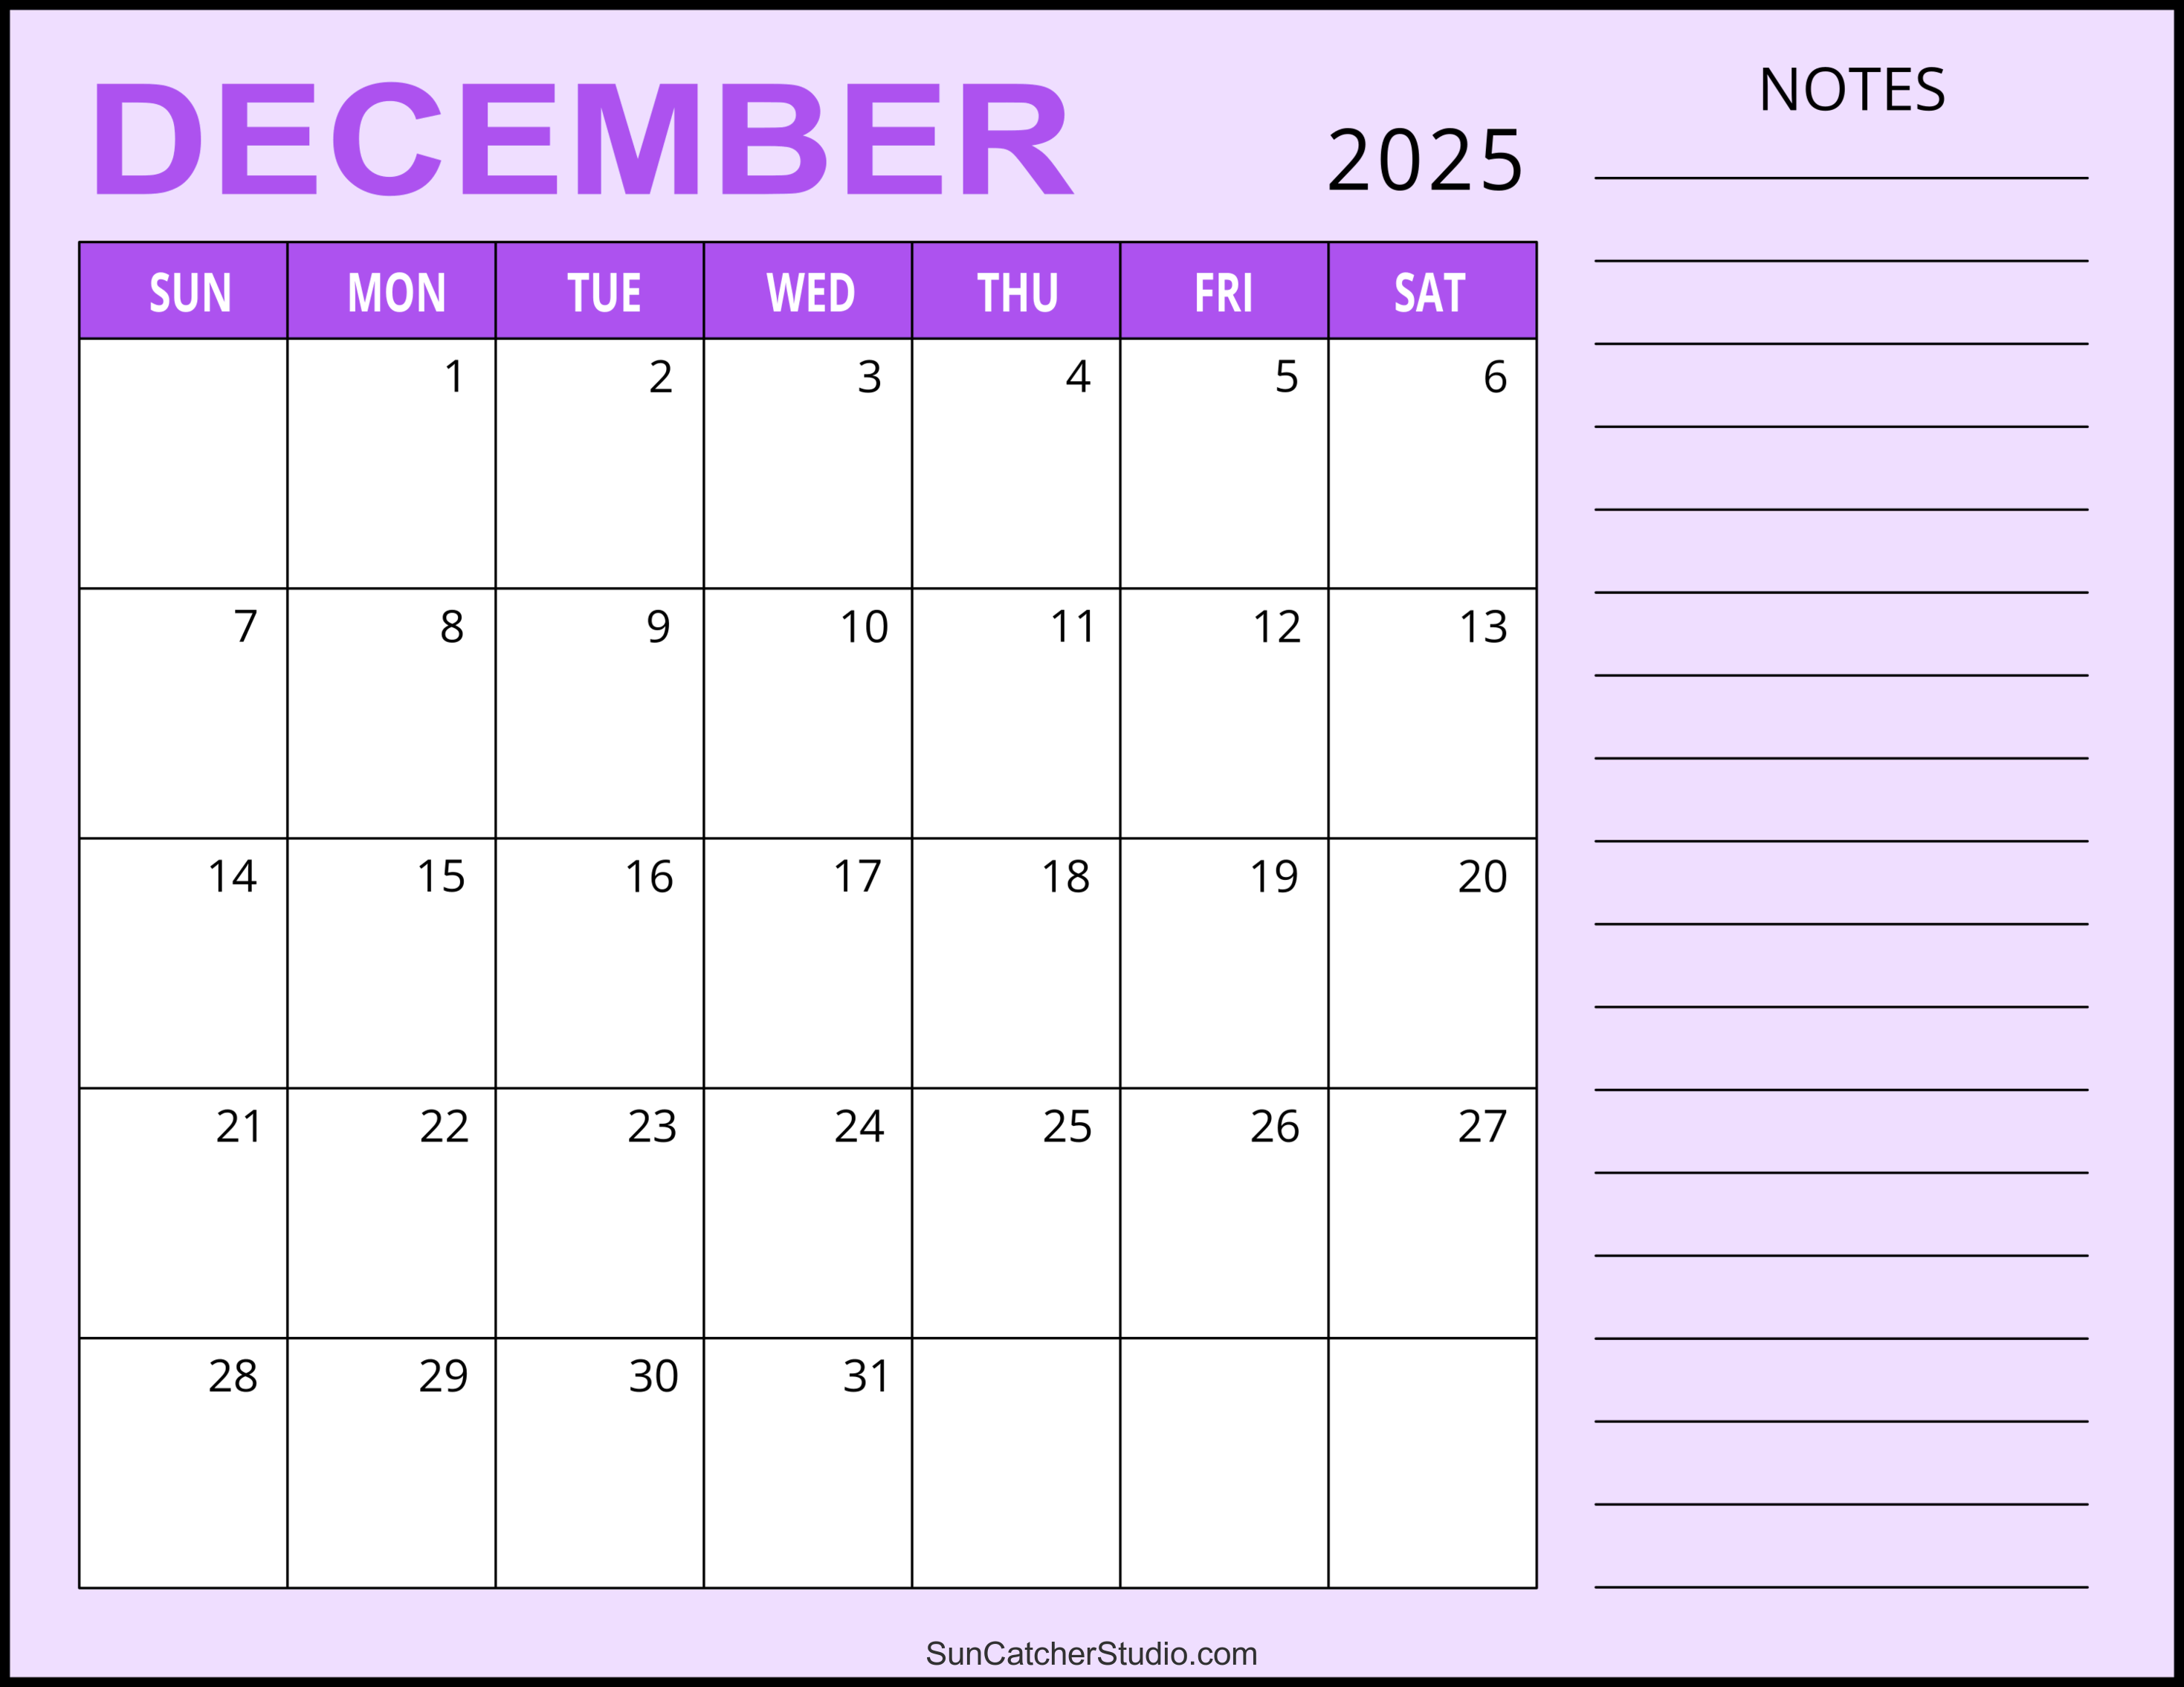 December 2025 Calendar (Free Printable) DIY Projects, Patterns